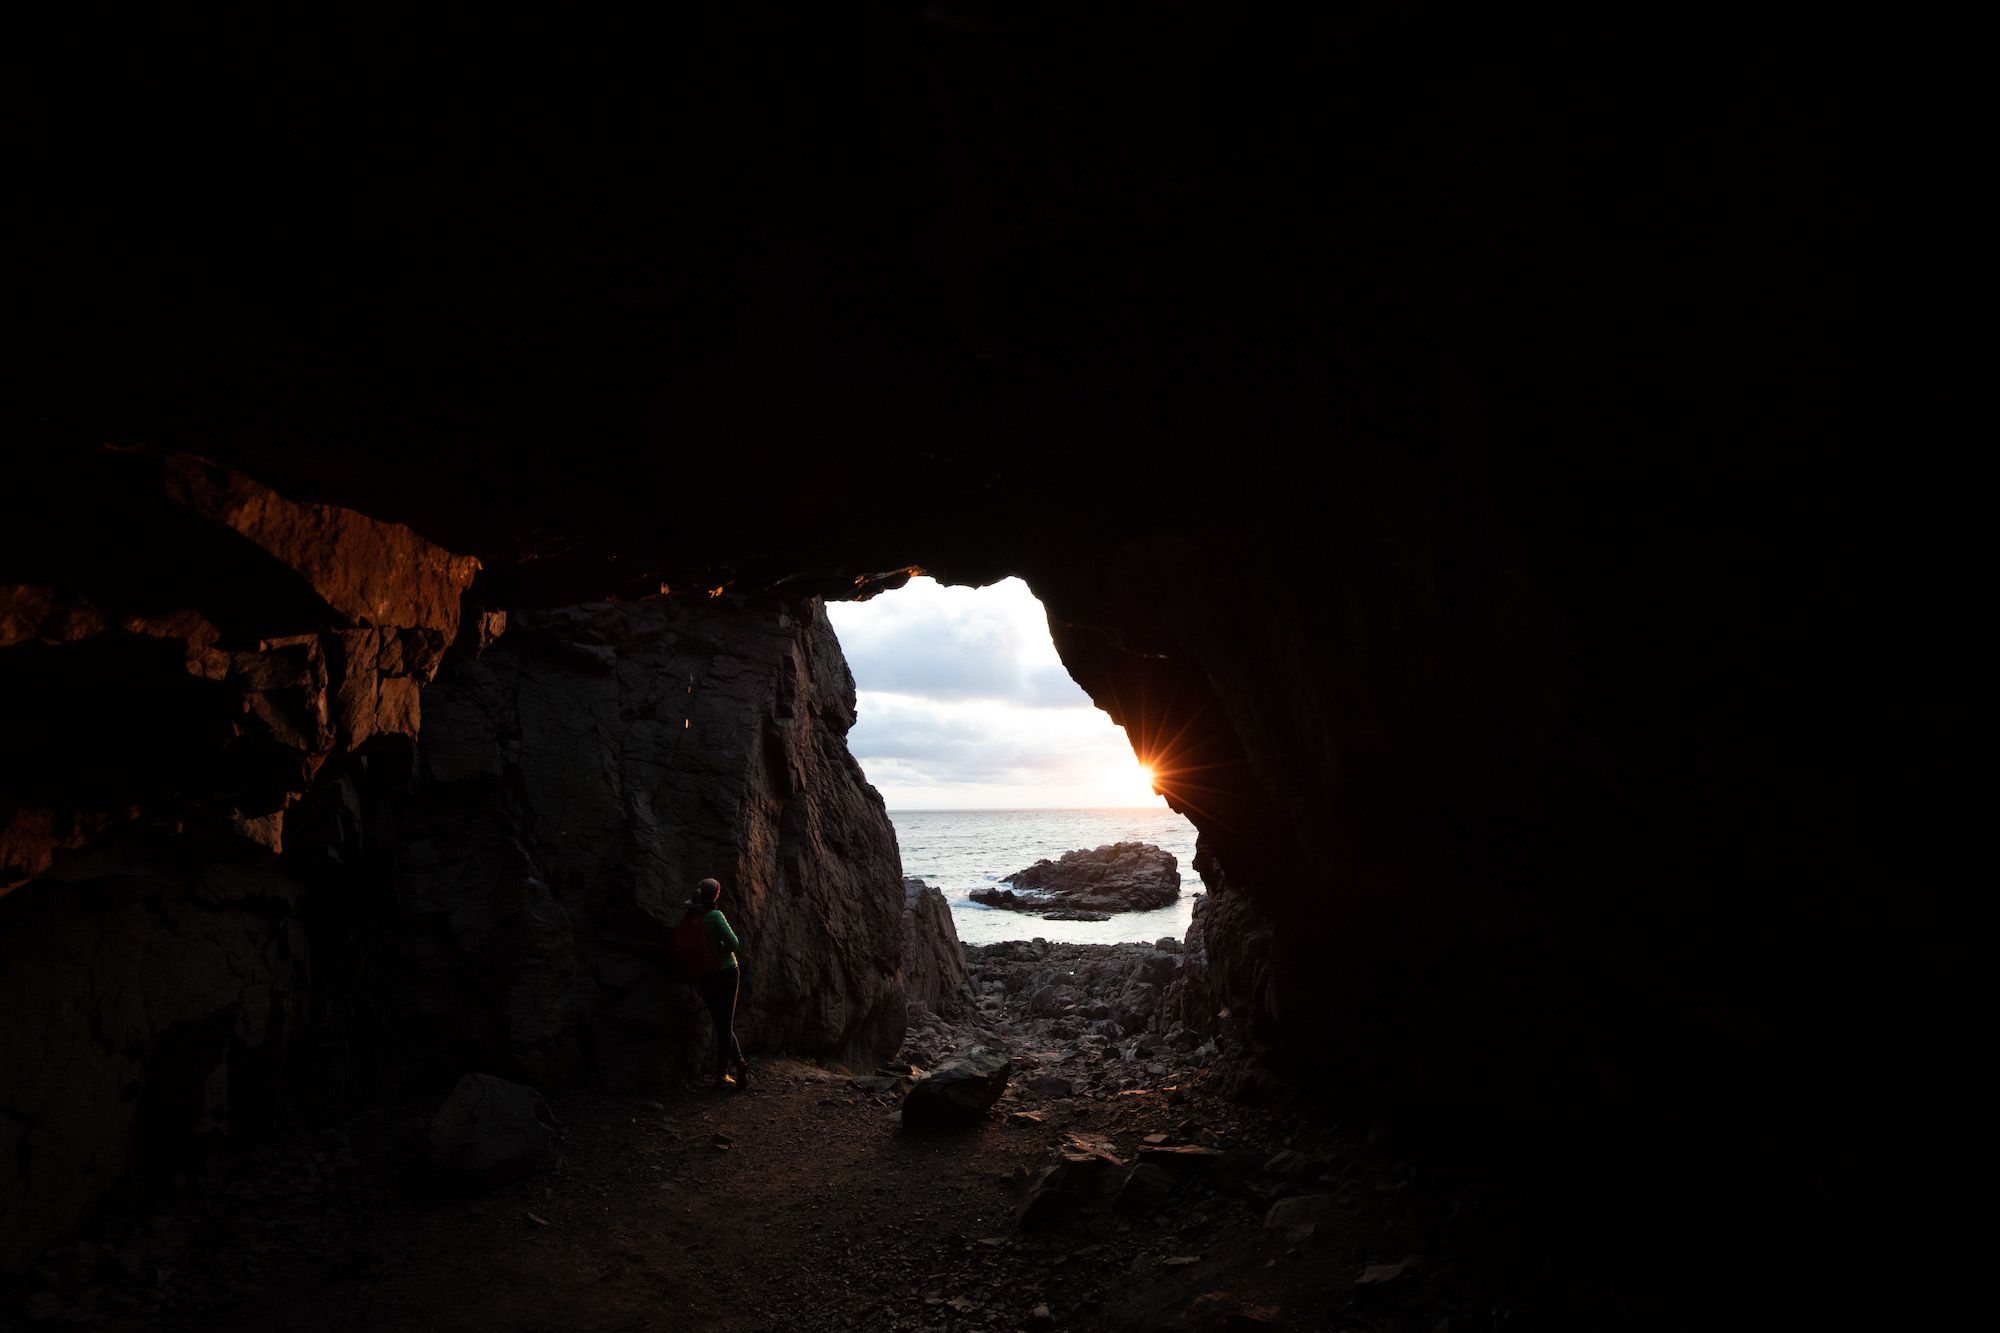 Unbearbeitet: Höhle am Meer in Schweden